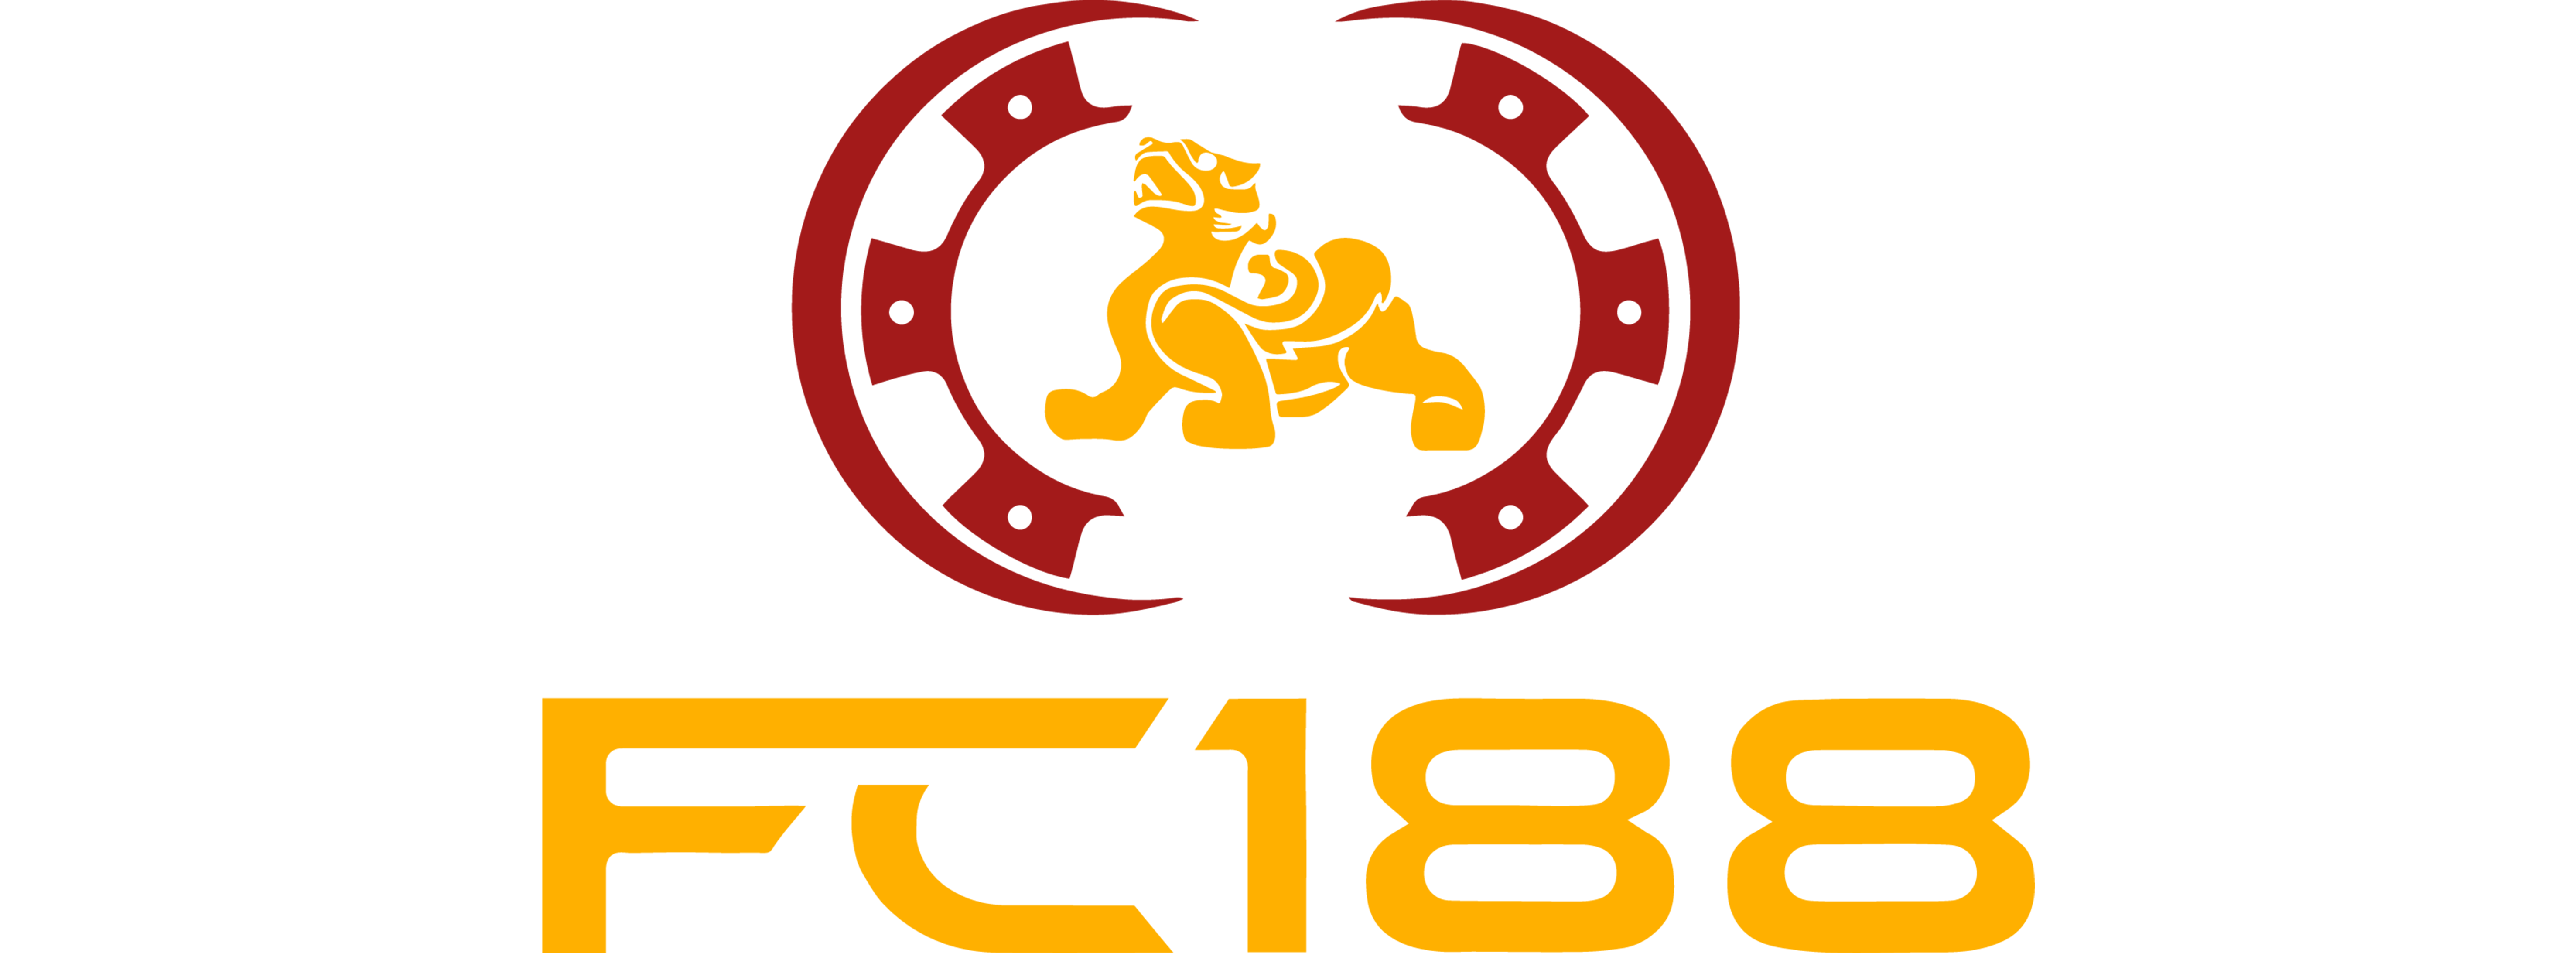 fc188 logo